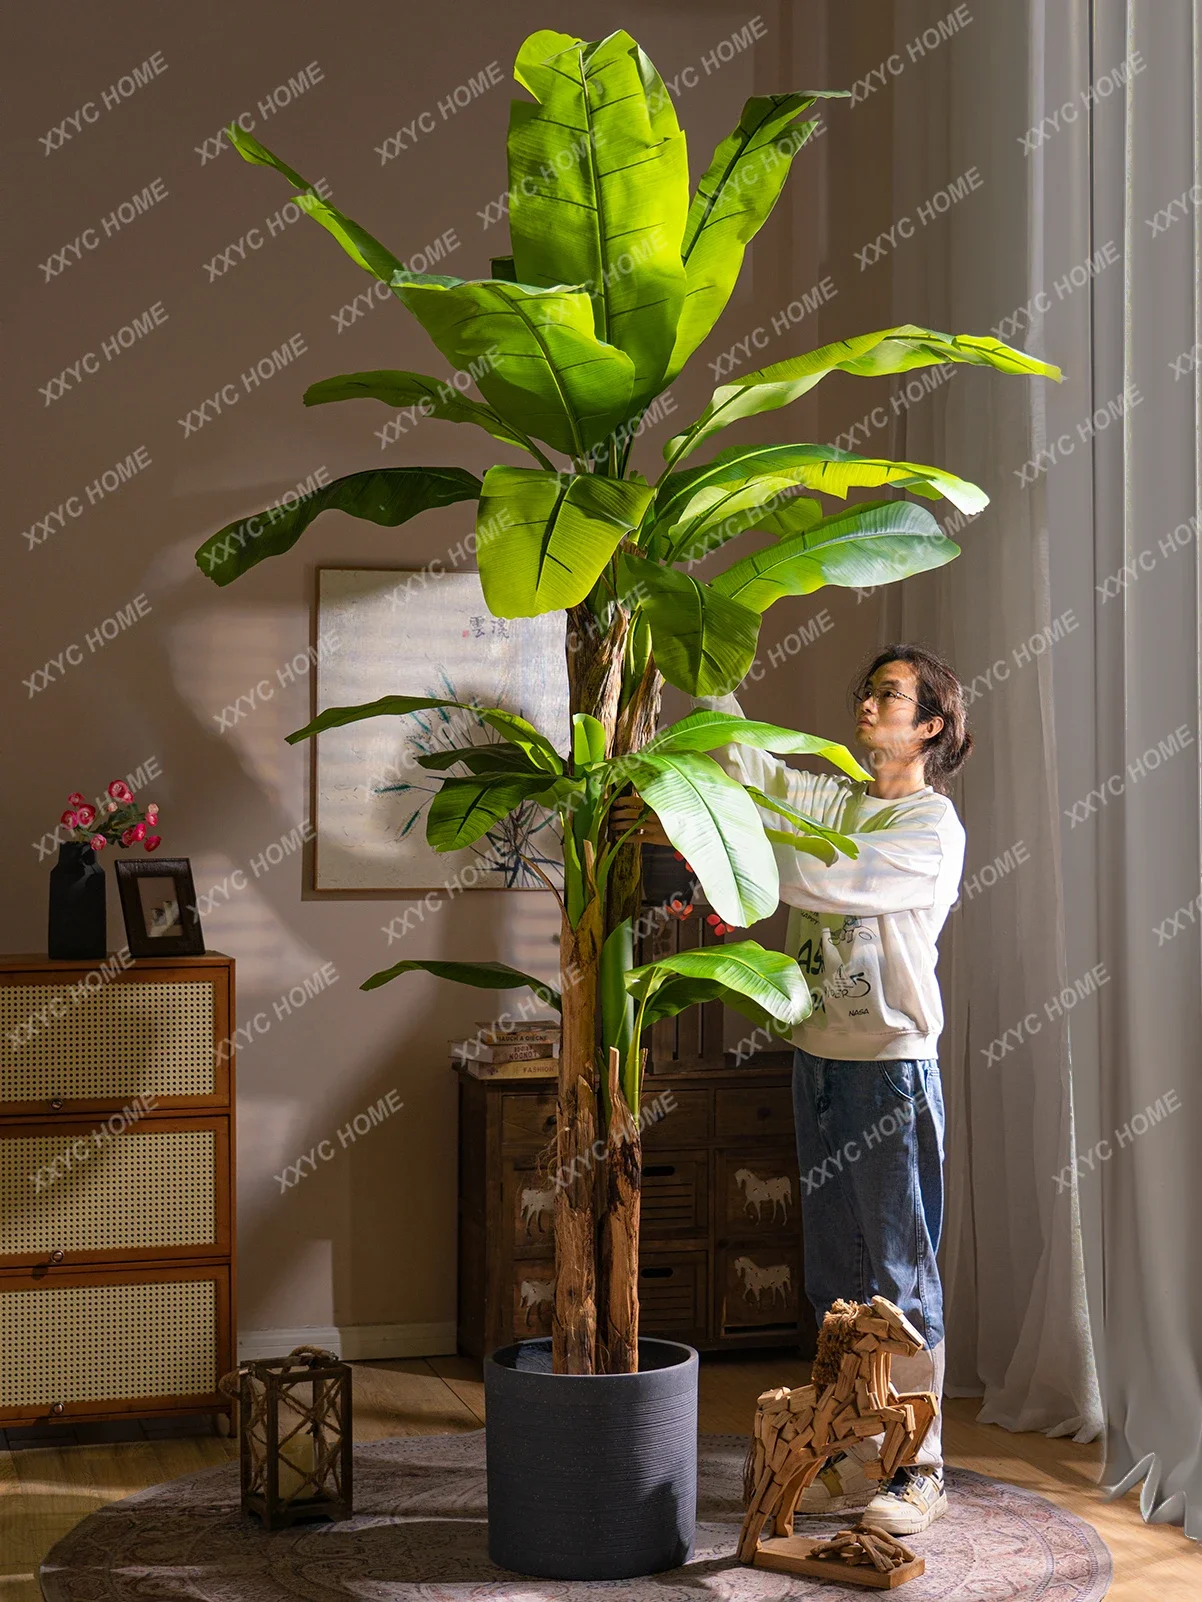 

XK Large Artificial Big Leaves Banana Tree Decorative Bionic Green Plant Indoor Plant Ornaments